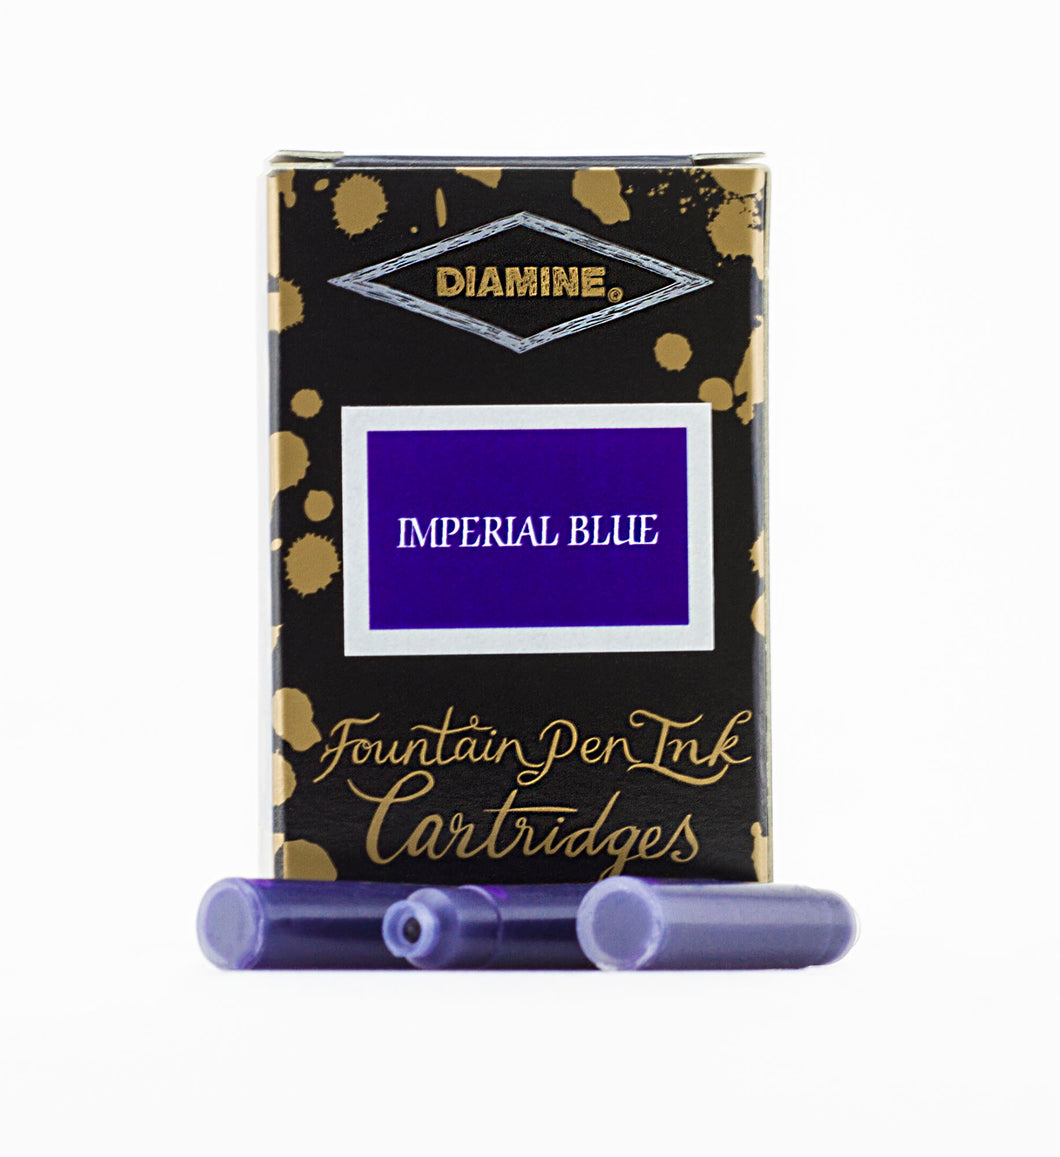 Diamine Fountain Pen Ink Cartridges - Imperial Blue